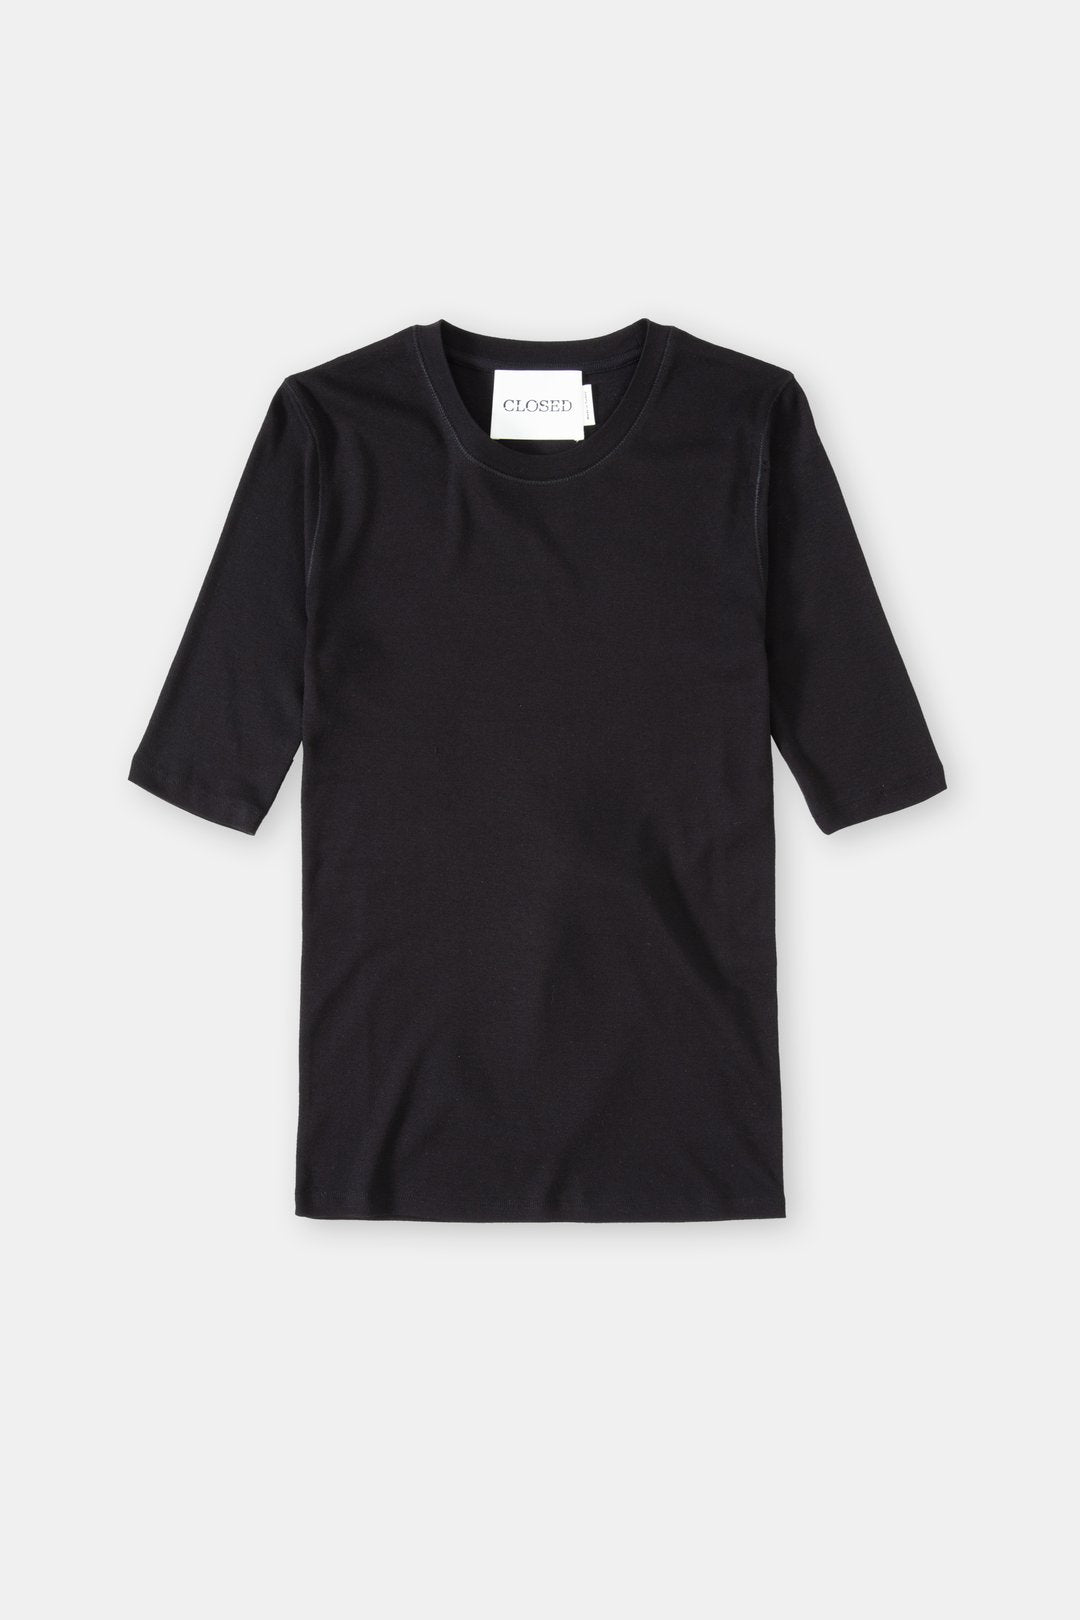 Closed T-Shirt Woman Modal Black